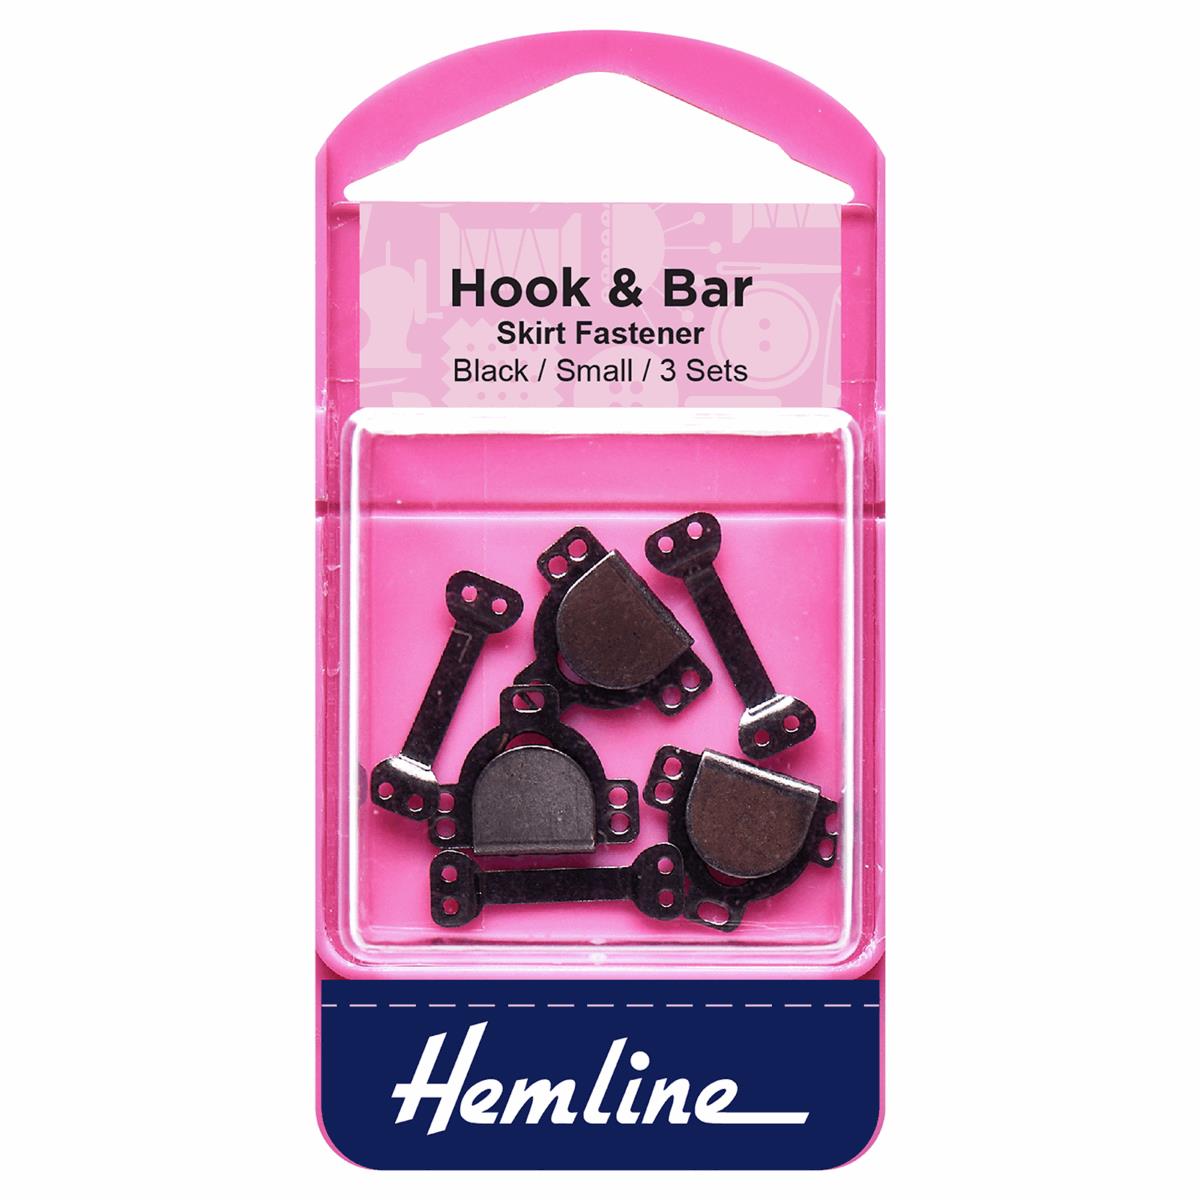 Hemline - hook and bar: black - Small